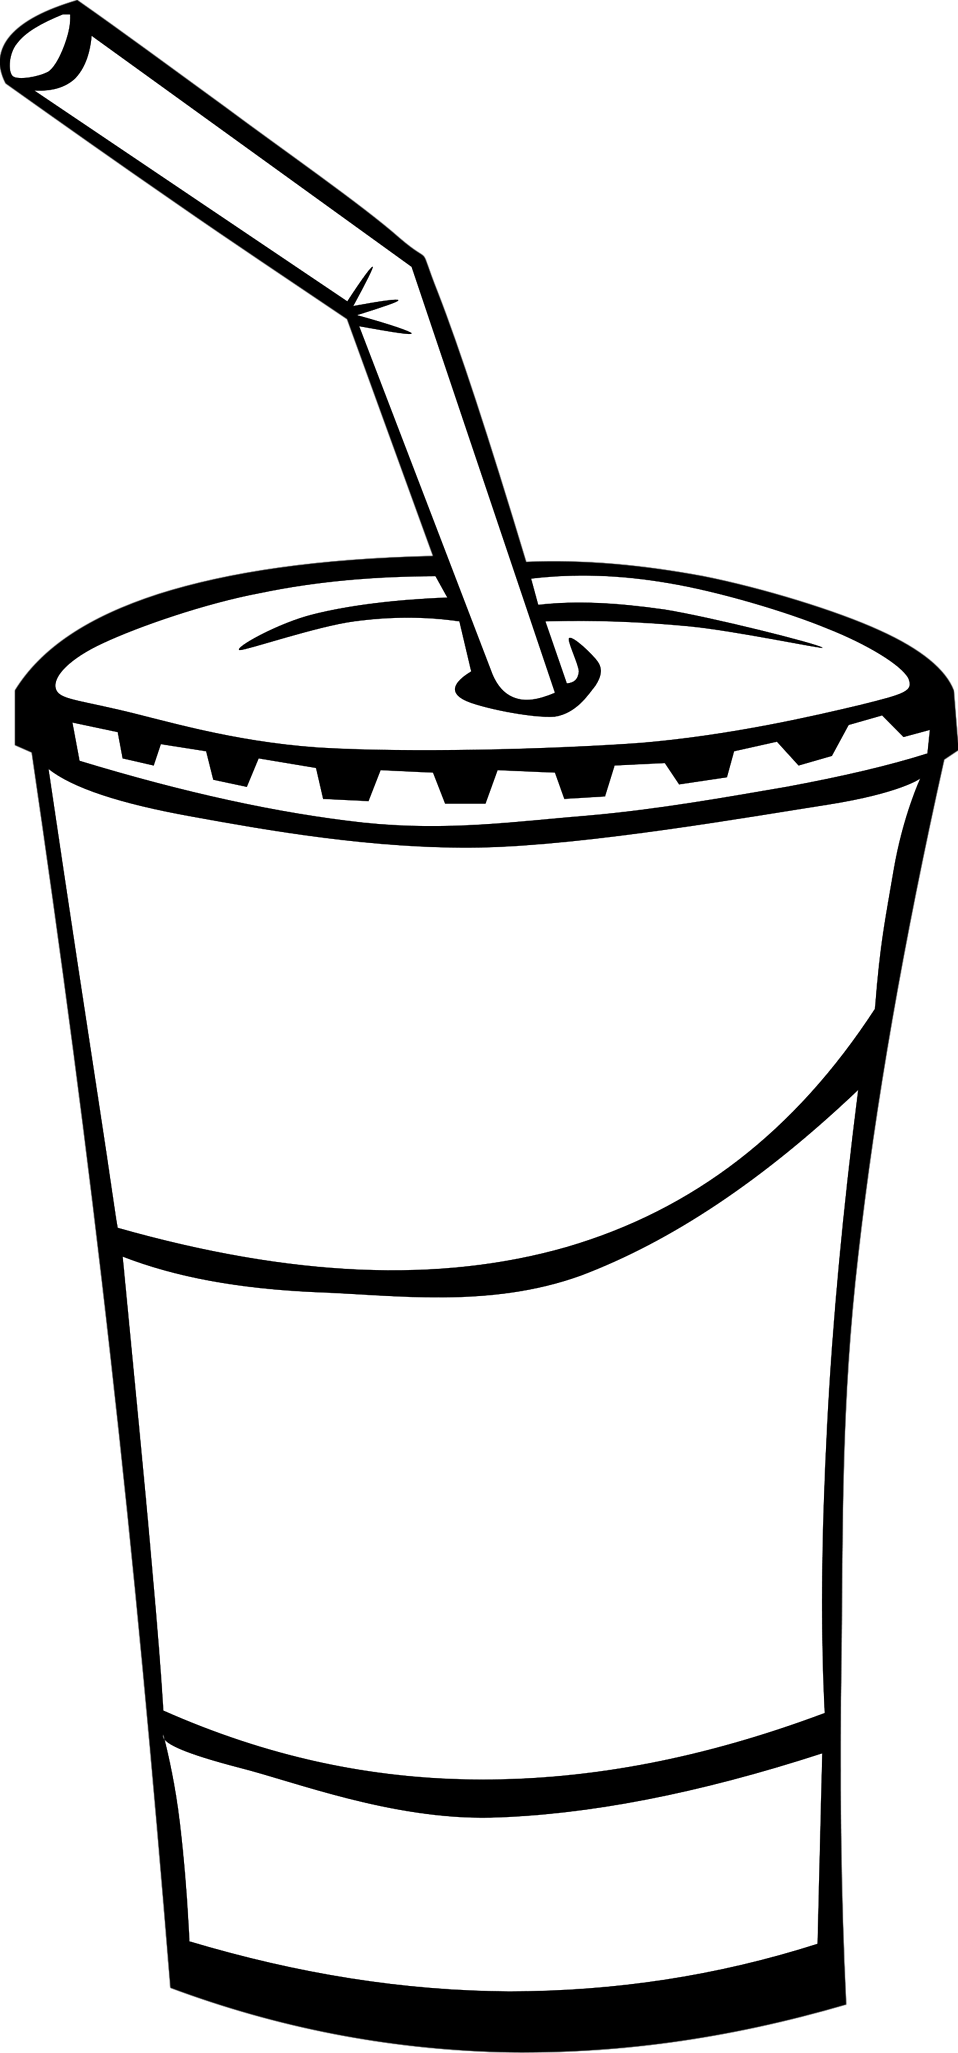 Cups cupblack